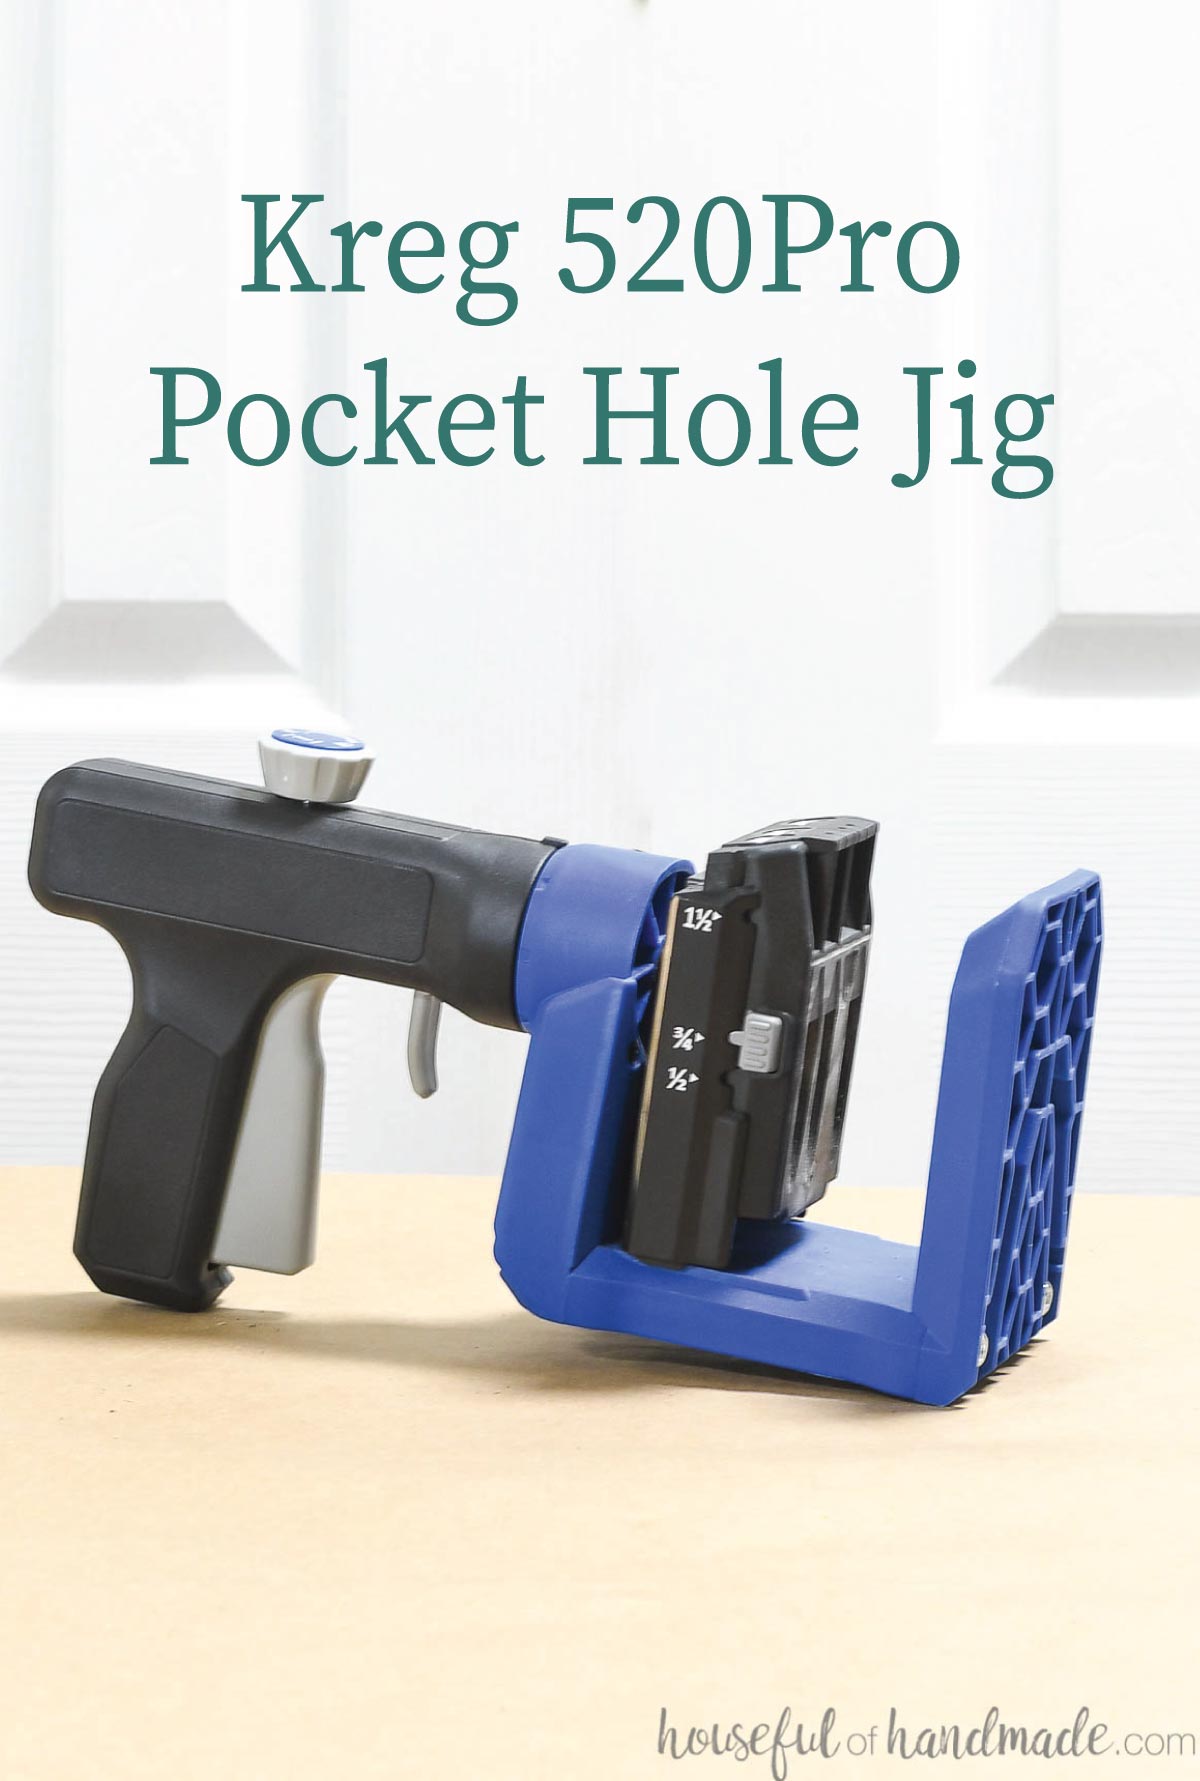 Kreg 520Pro pocket hole jig laying on a table with words "Kreg 520Pro Pocket hole jig" above it.